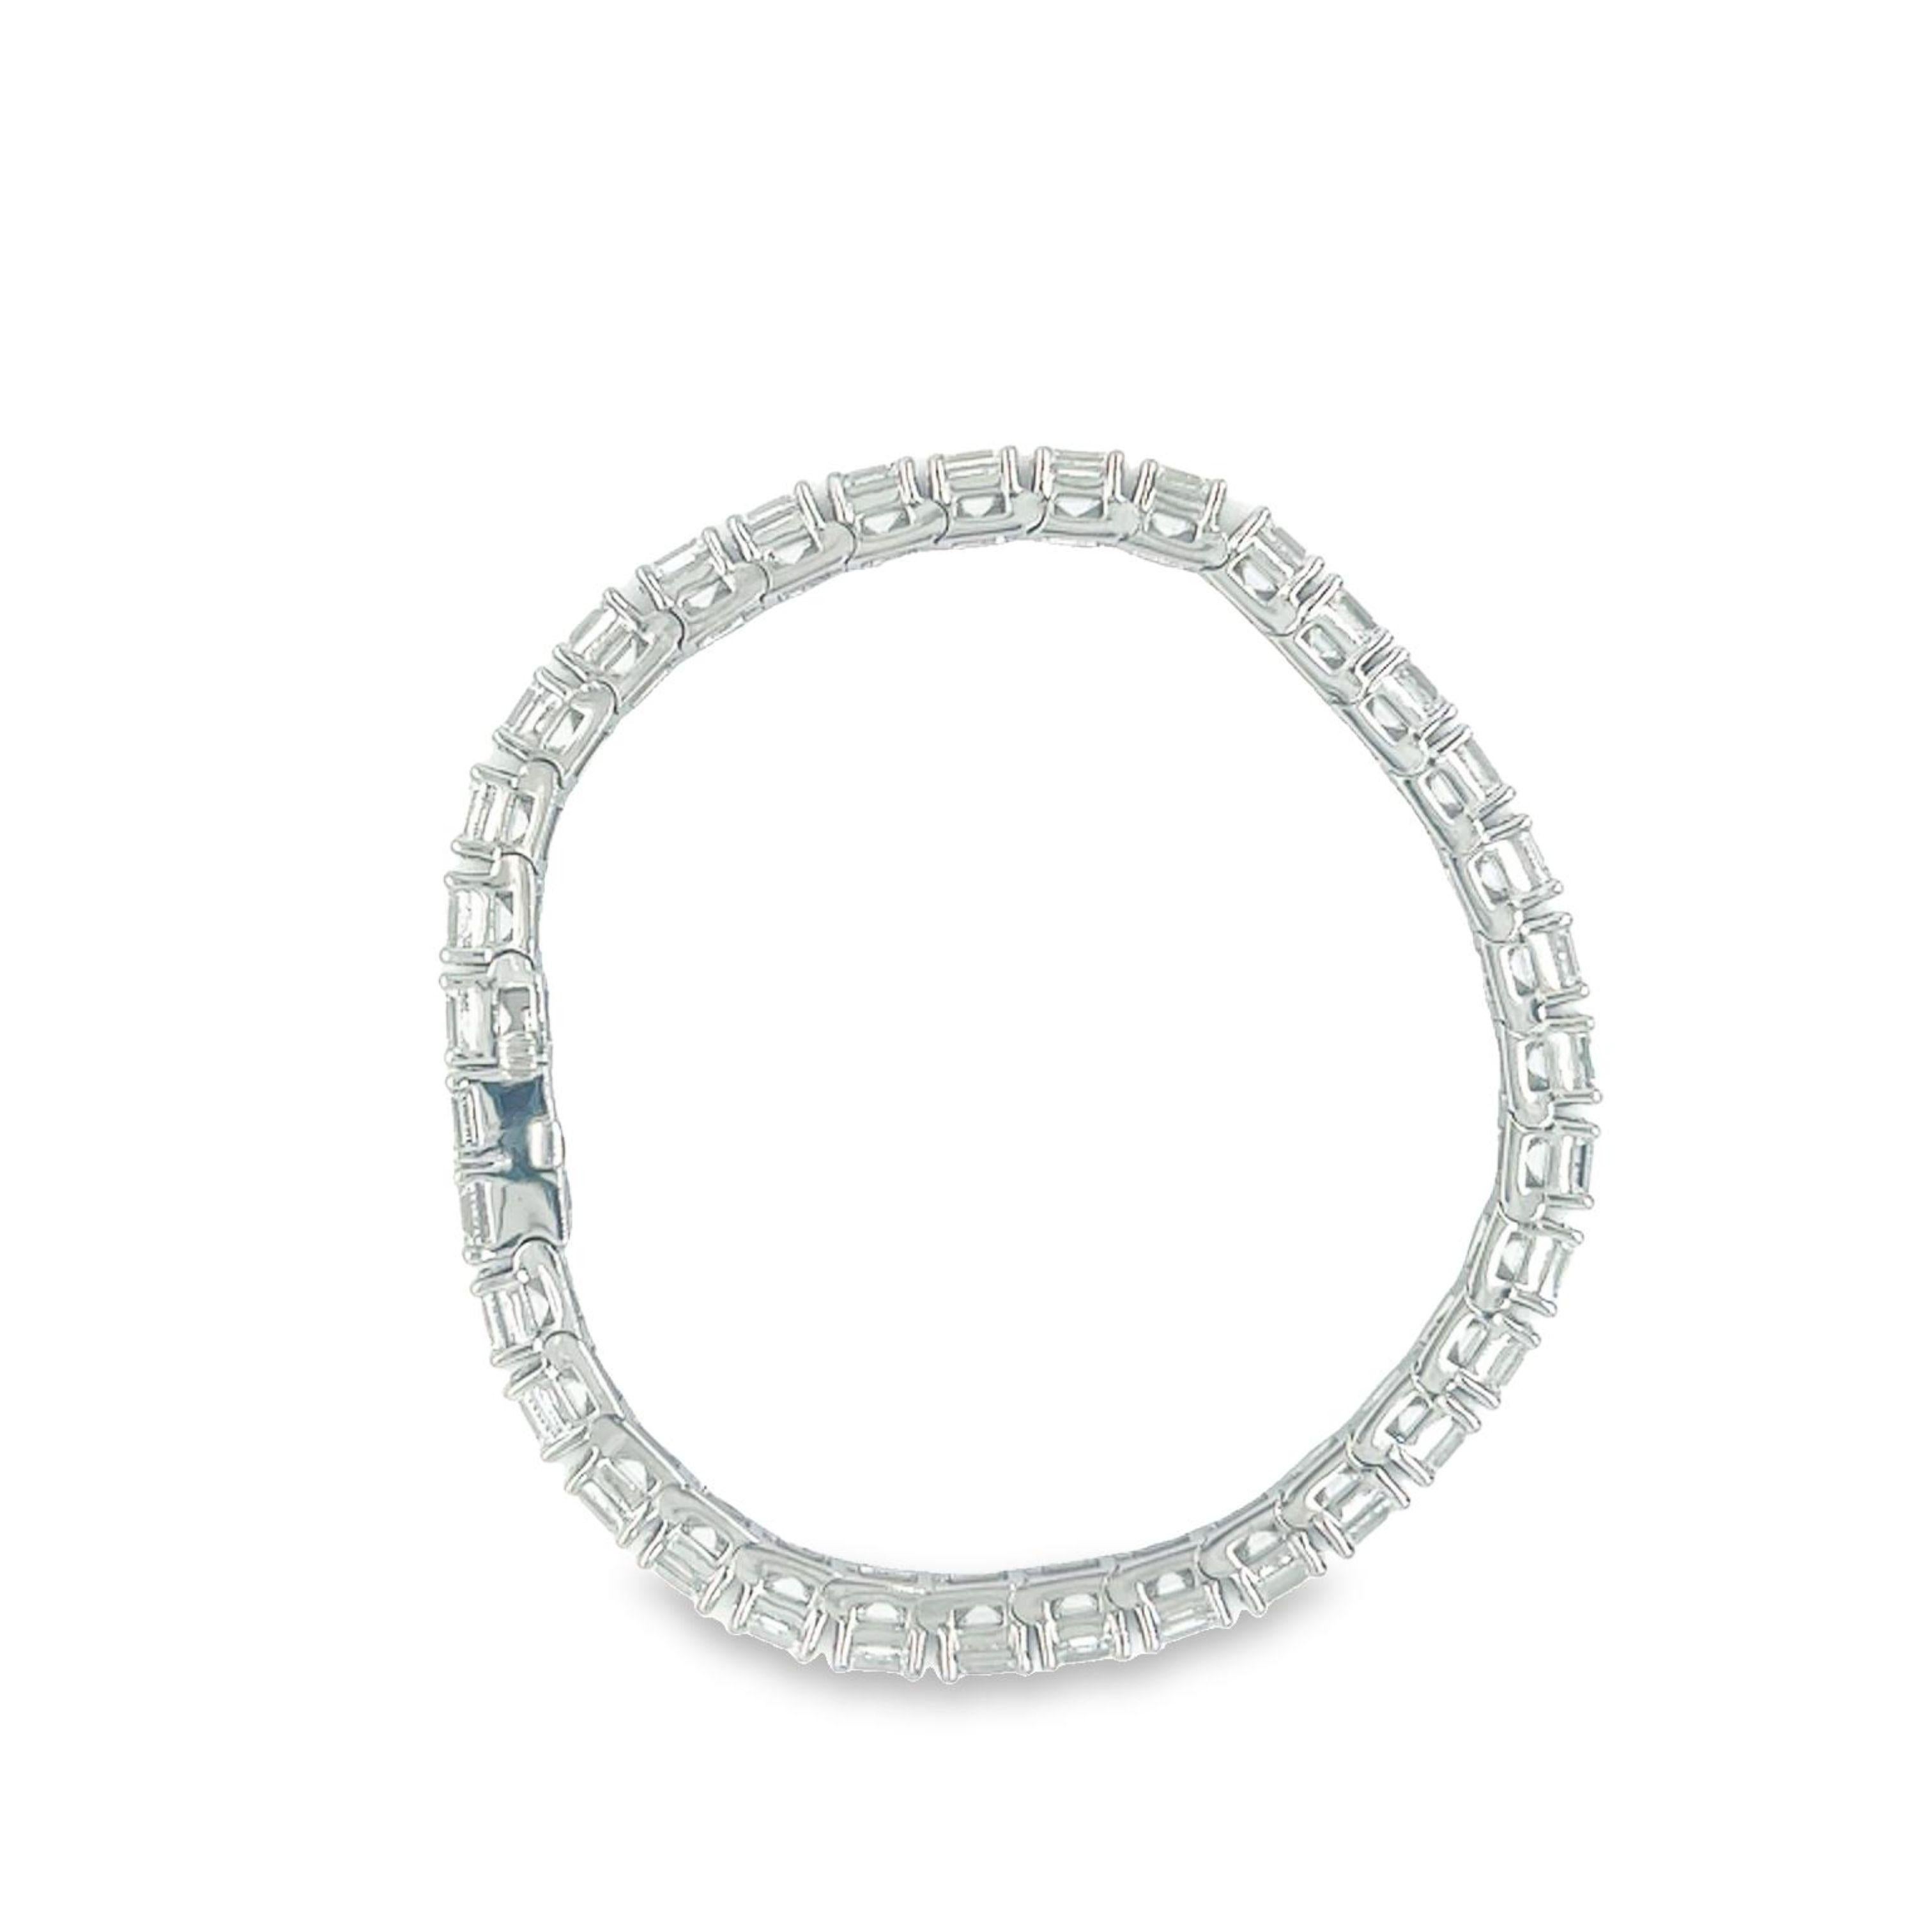 David Rosenberg 24.66 Carat Tw White Asscher Cut Gia Diamond Tennis Bracelet For Sale 1